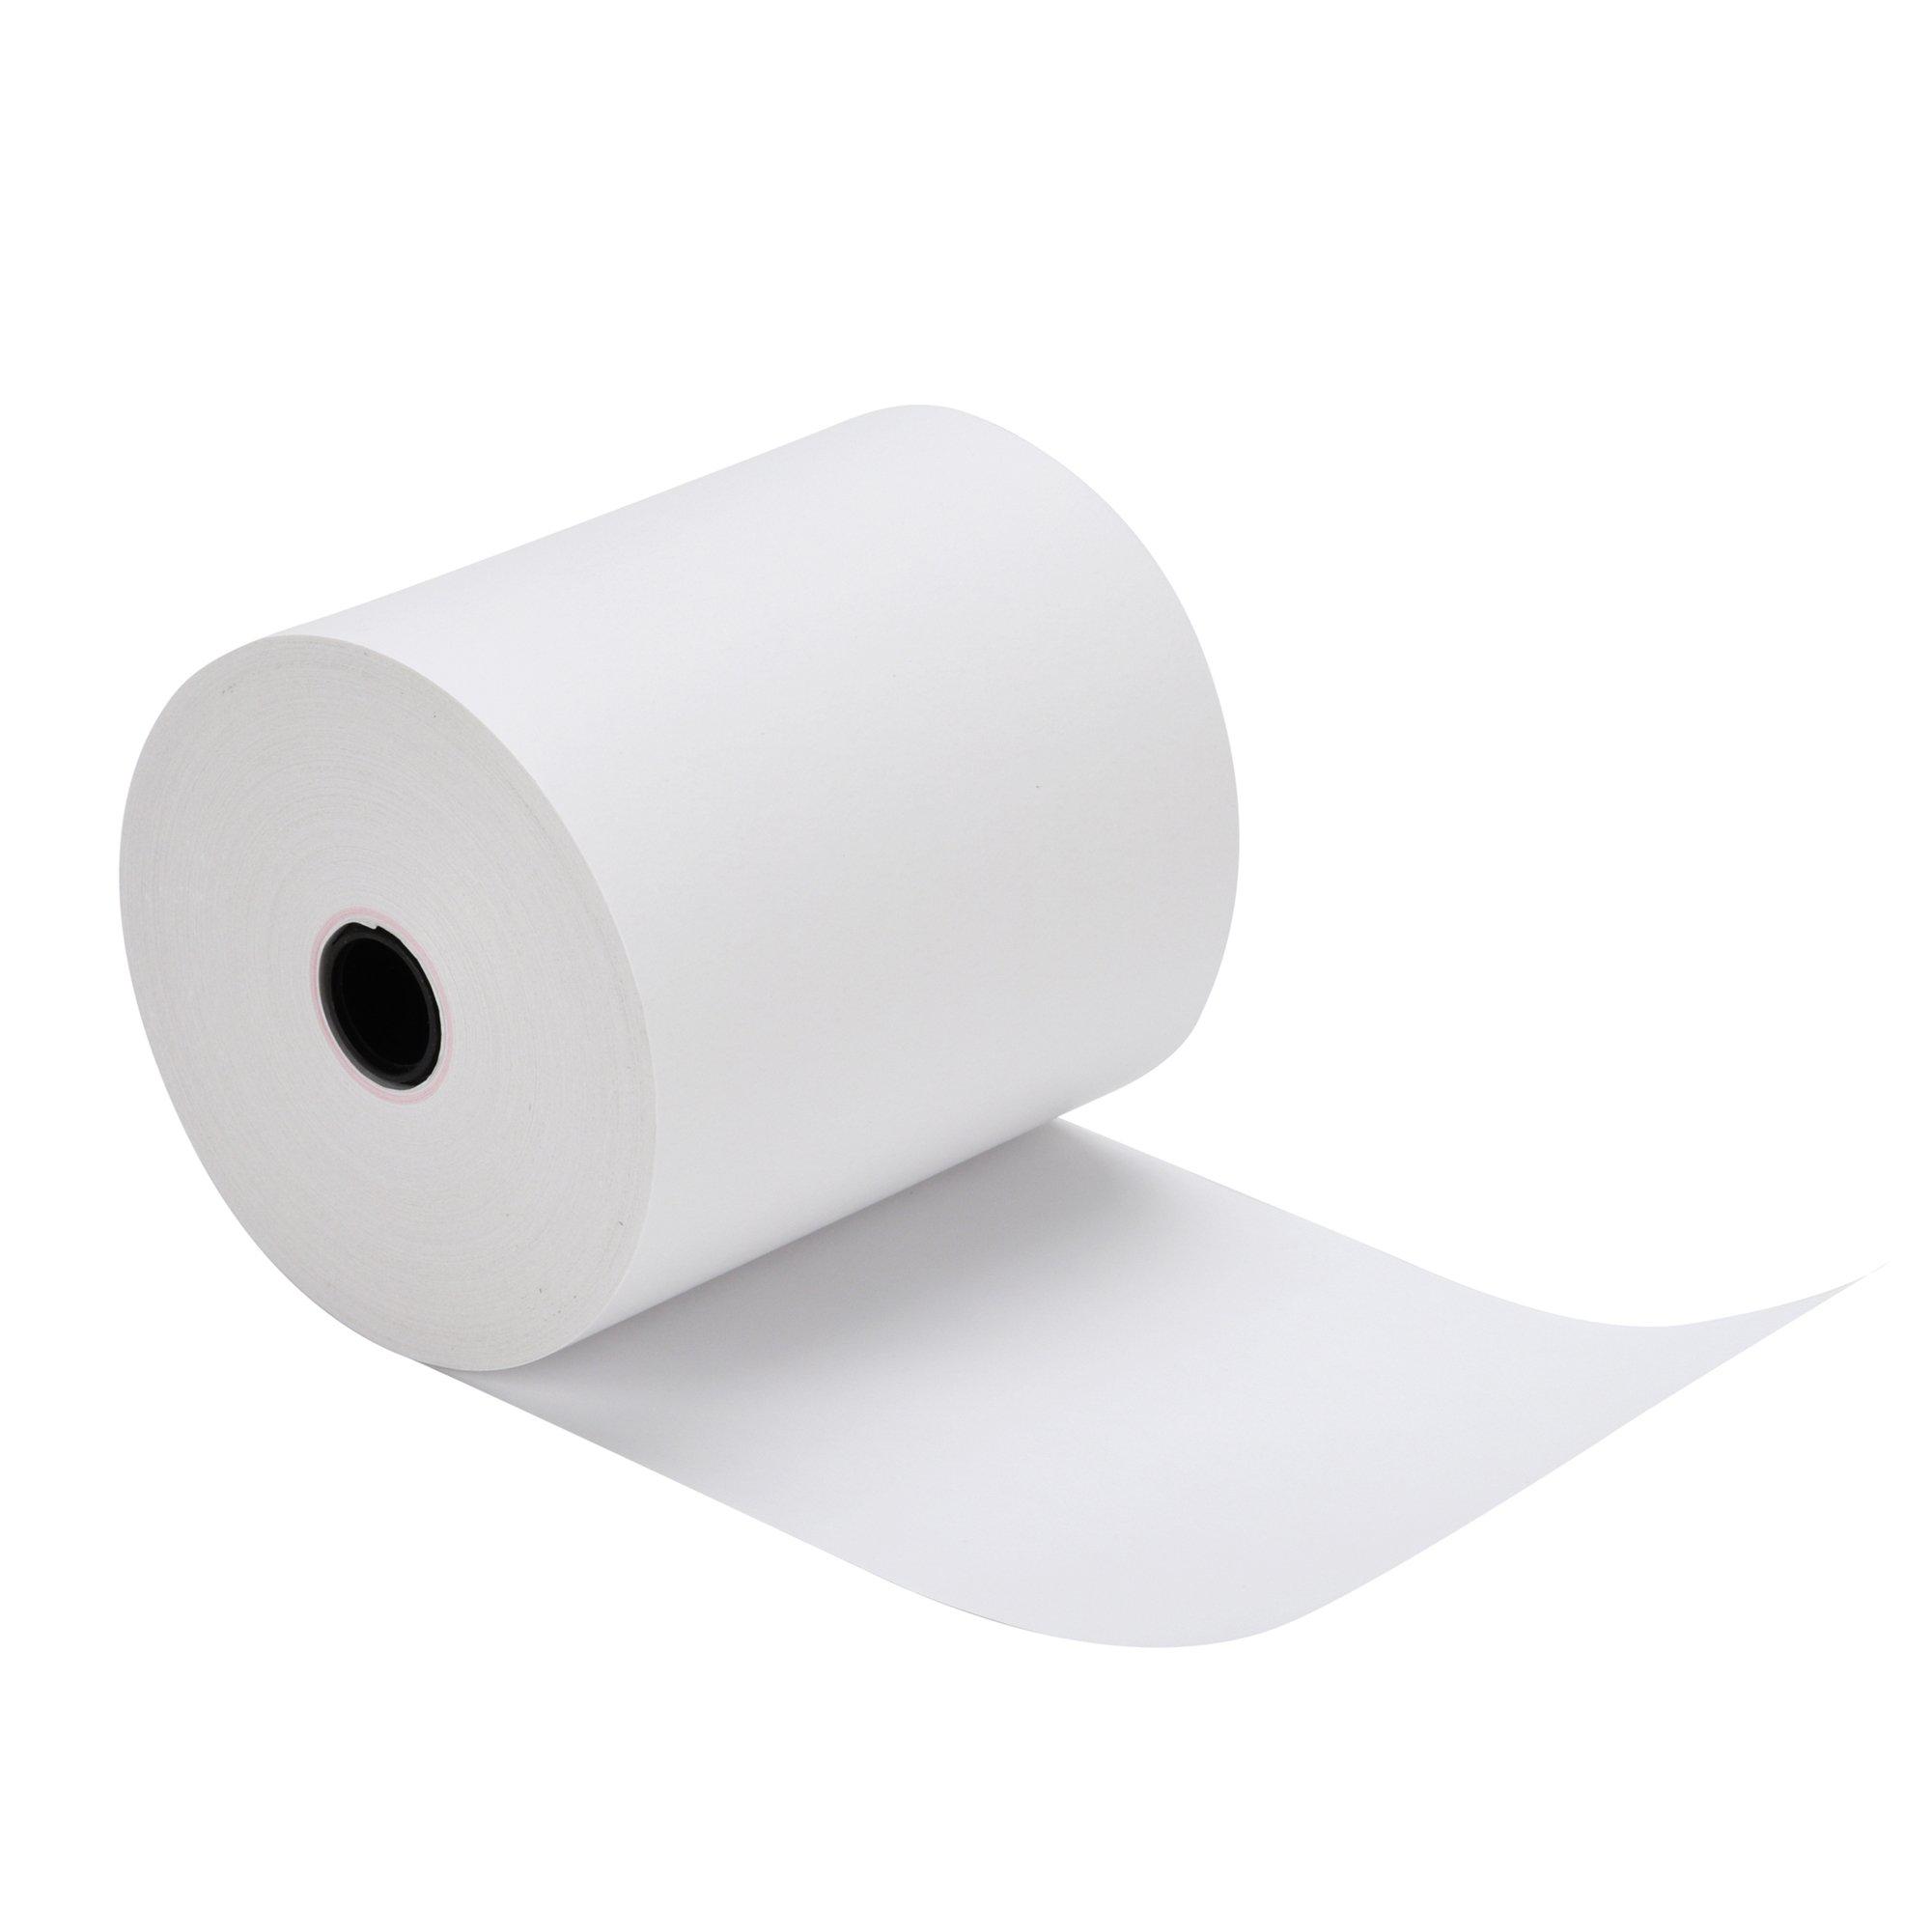 funglam thermal receipt paper pos cash register paper rolls 2 1/4" x 50' (50 rolls)